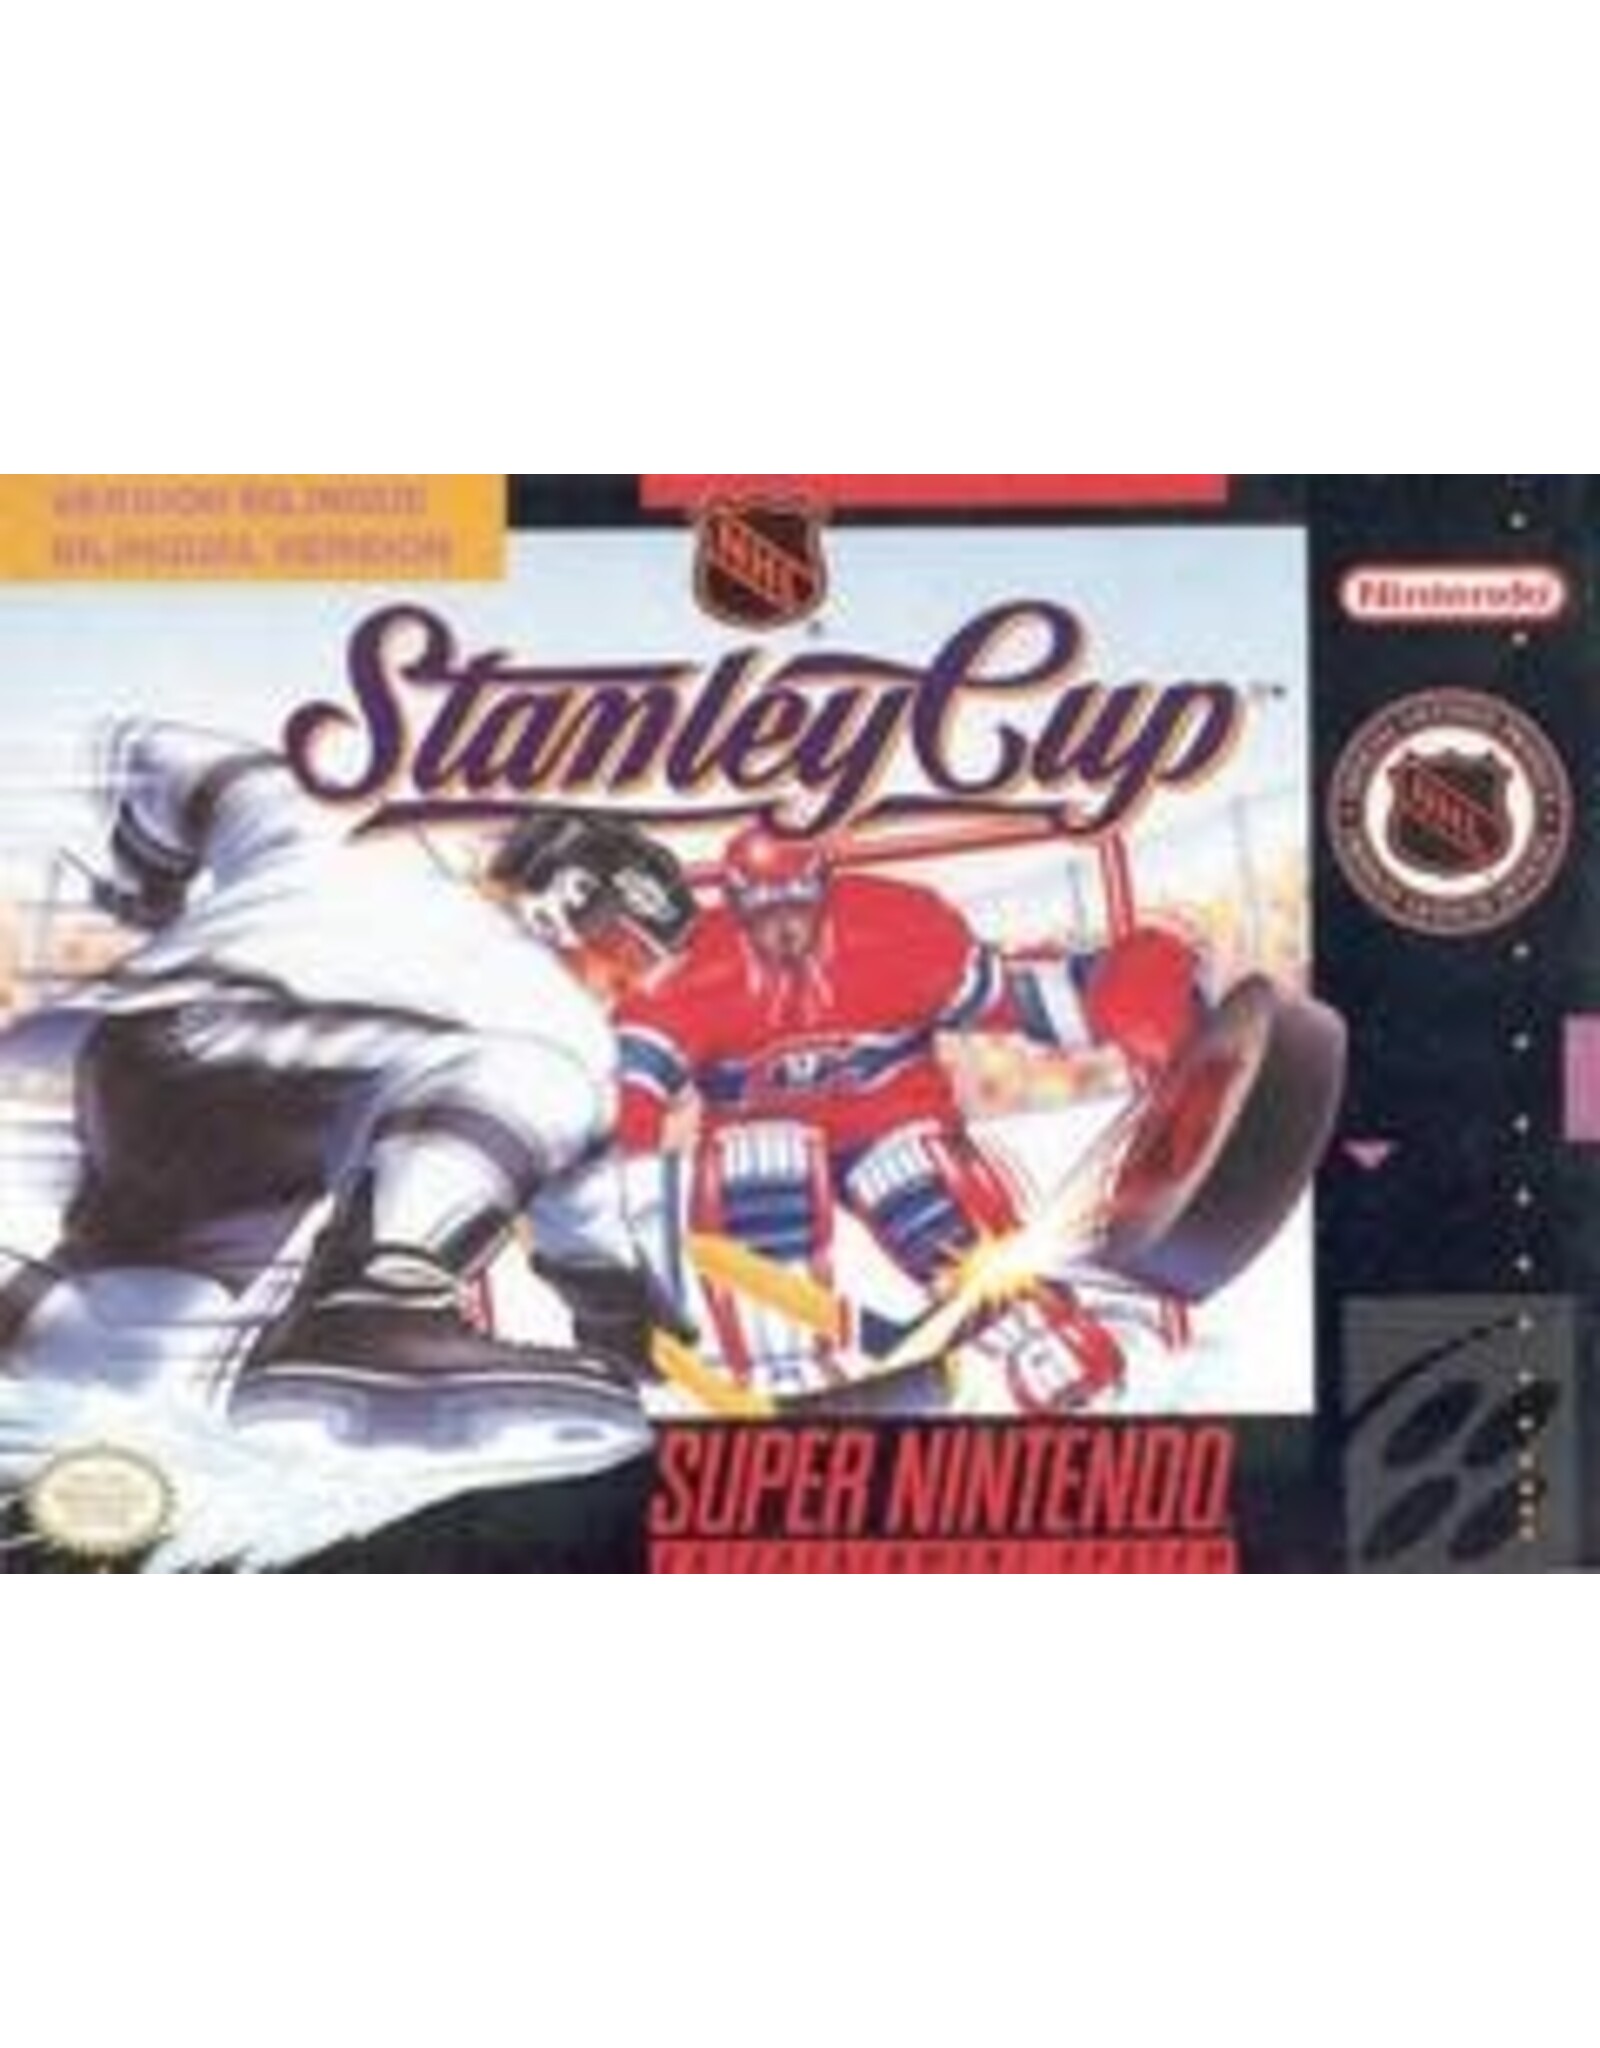 Super Nintendo NHL Stanley Cup (CiB)